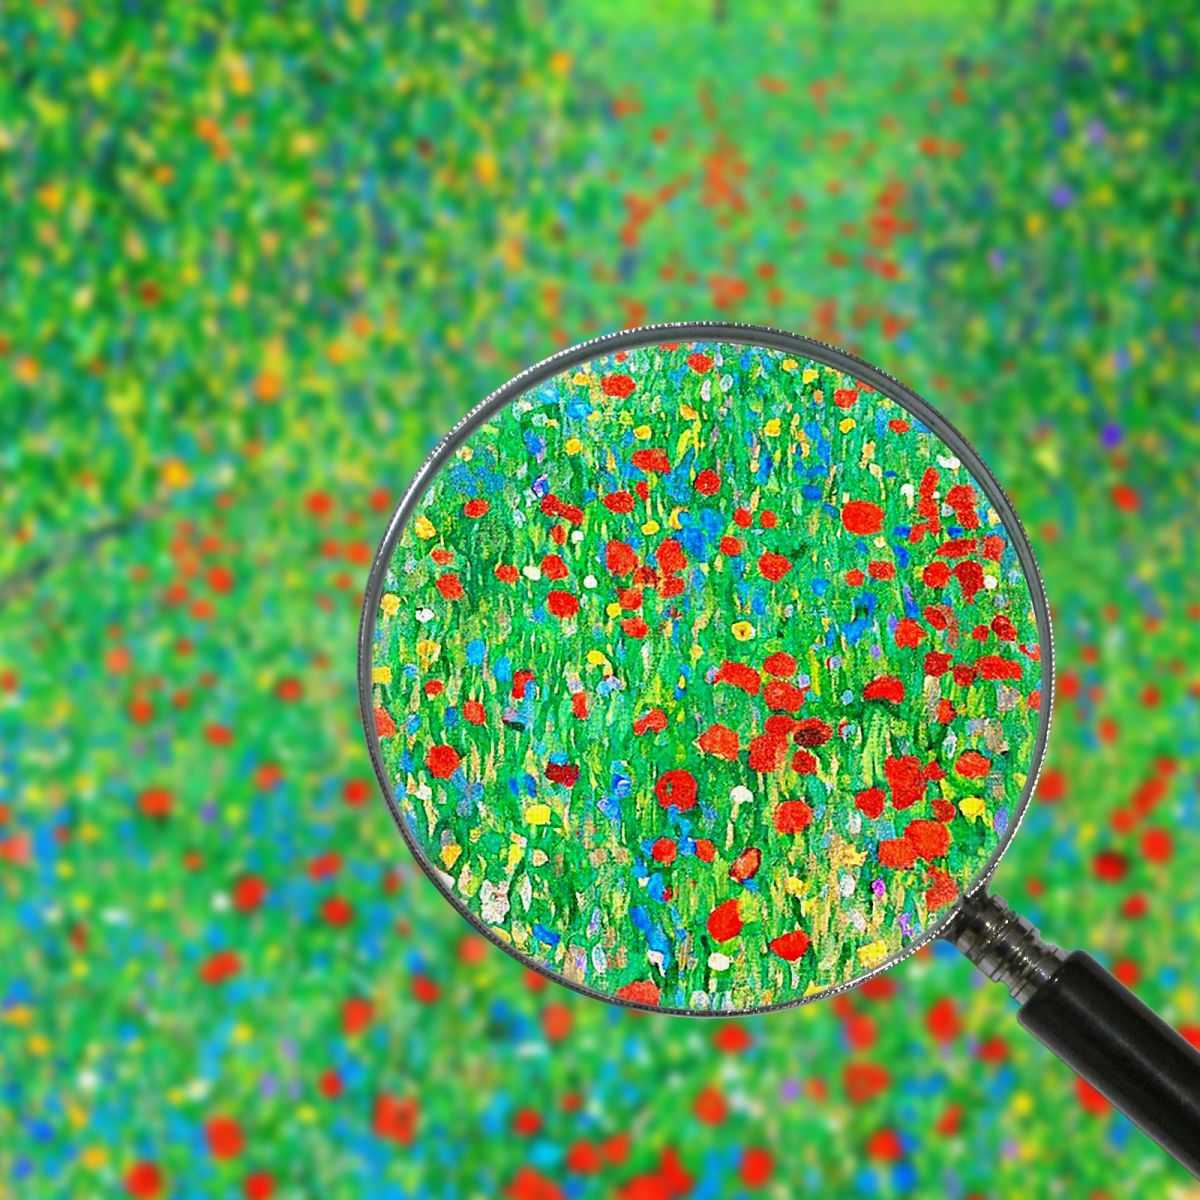 Field Of Poppies Gustav Klimt canvas print KG44